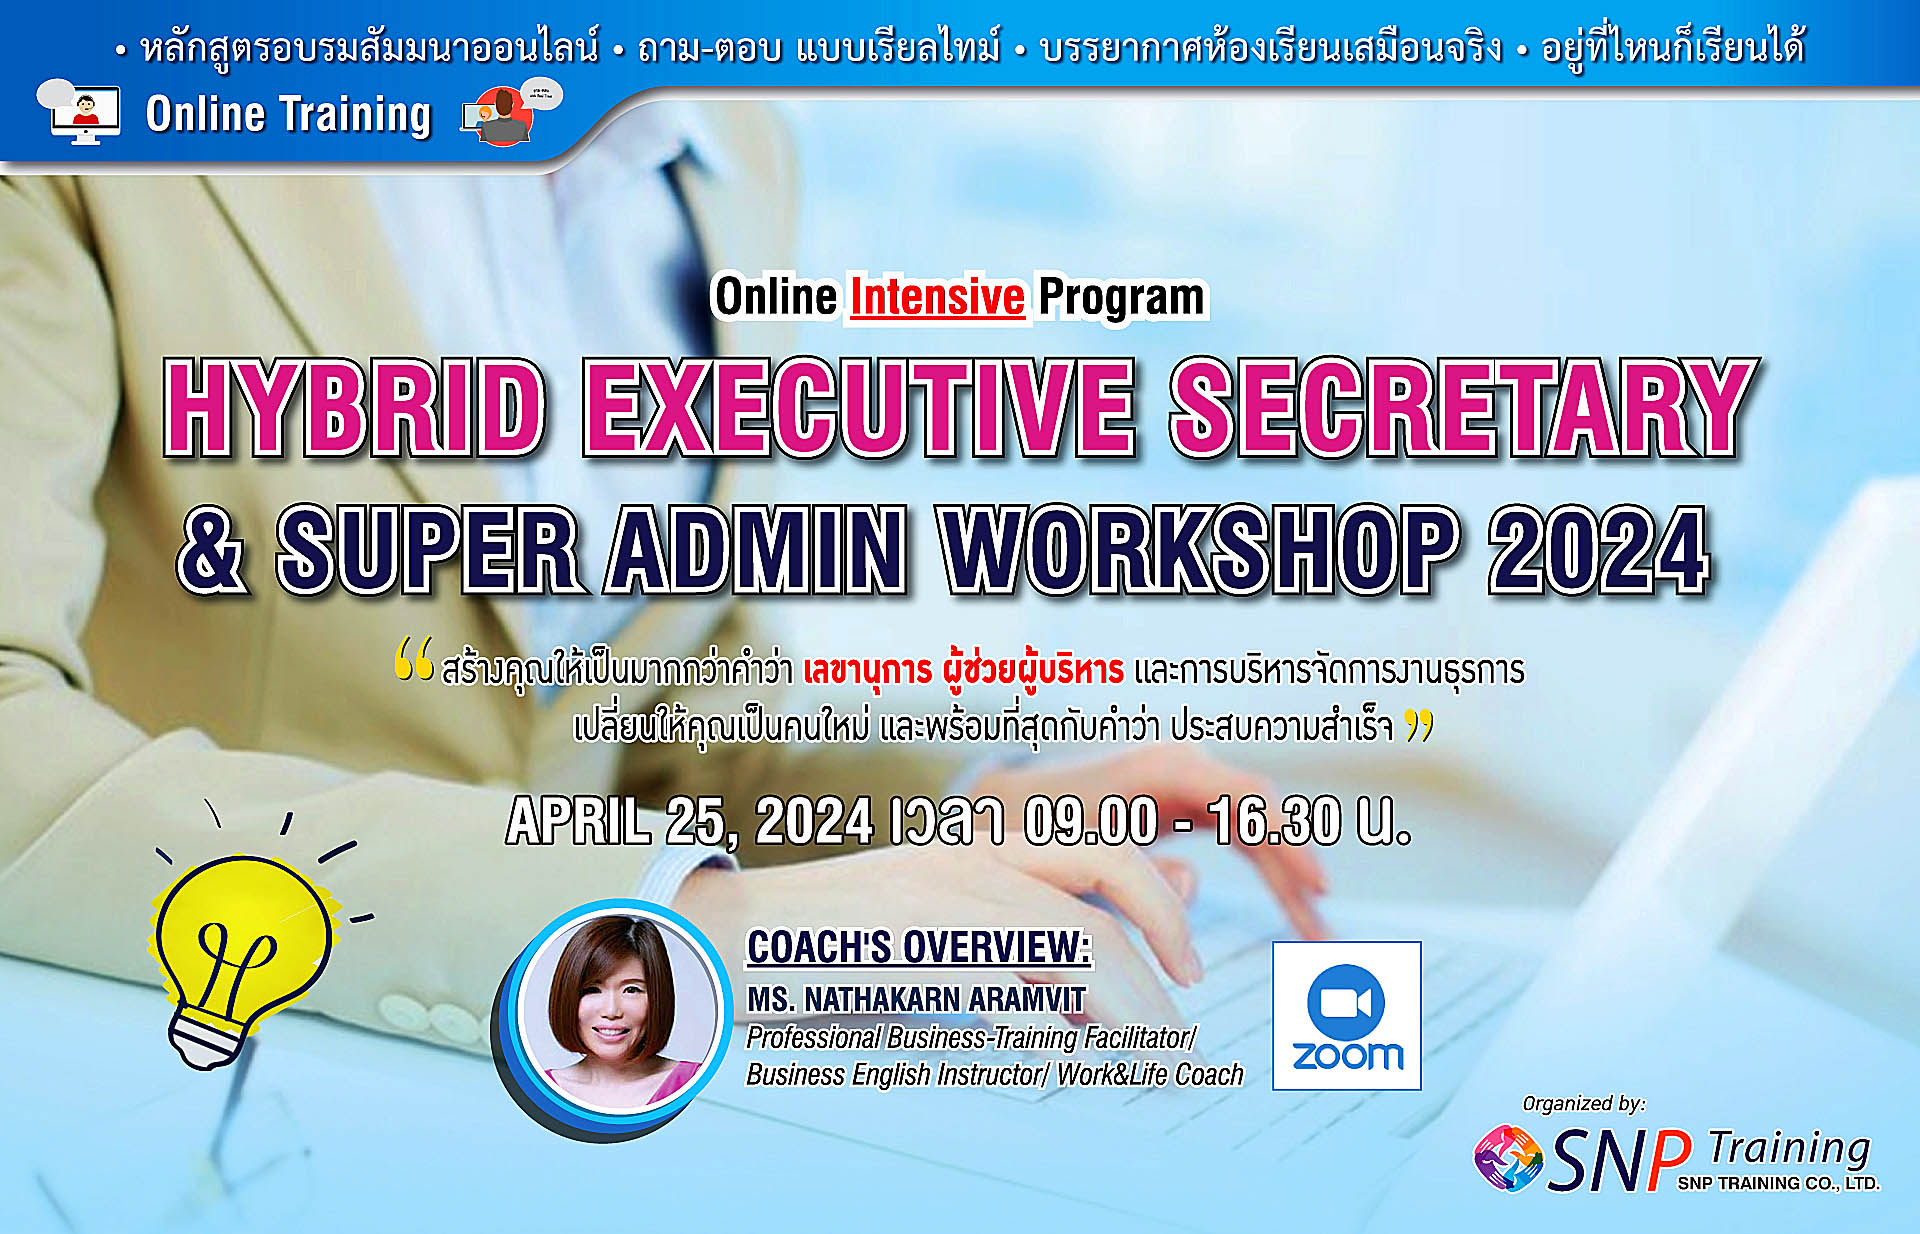 Hybrid Executive Secretary & Super Admin Workshop 2024